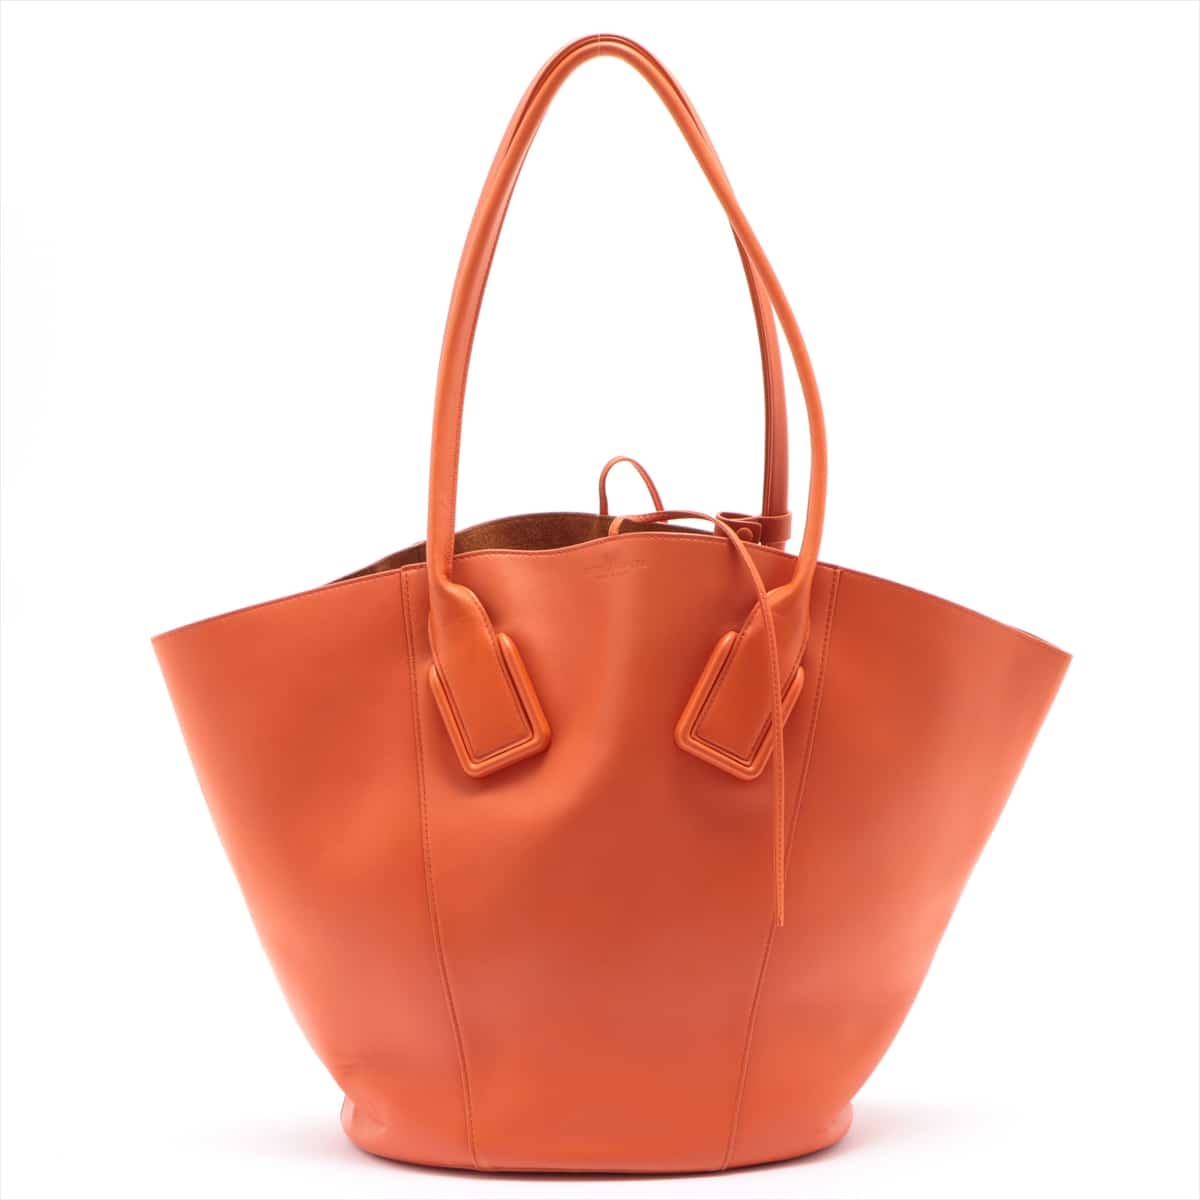 Bottega Veneta Basket Leather Tote bag Orange with pouch